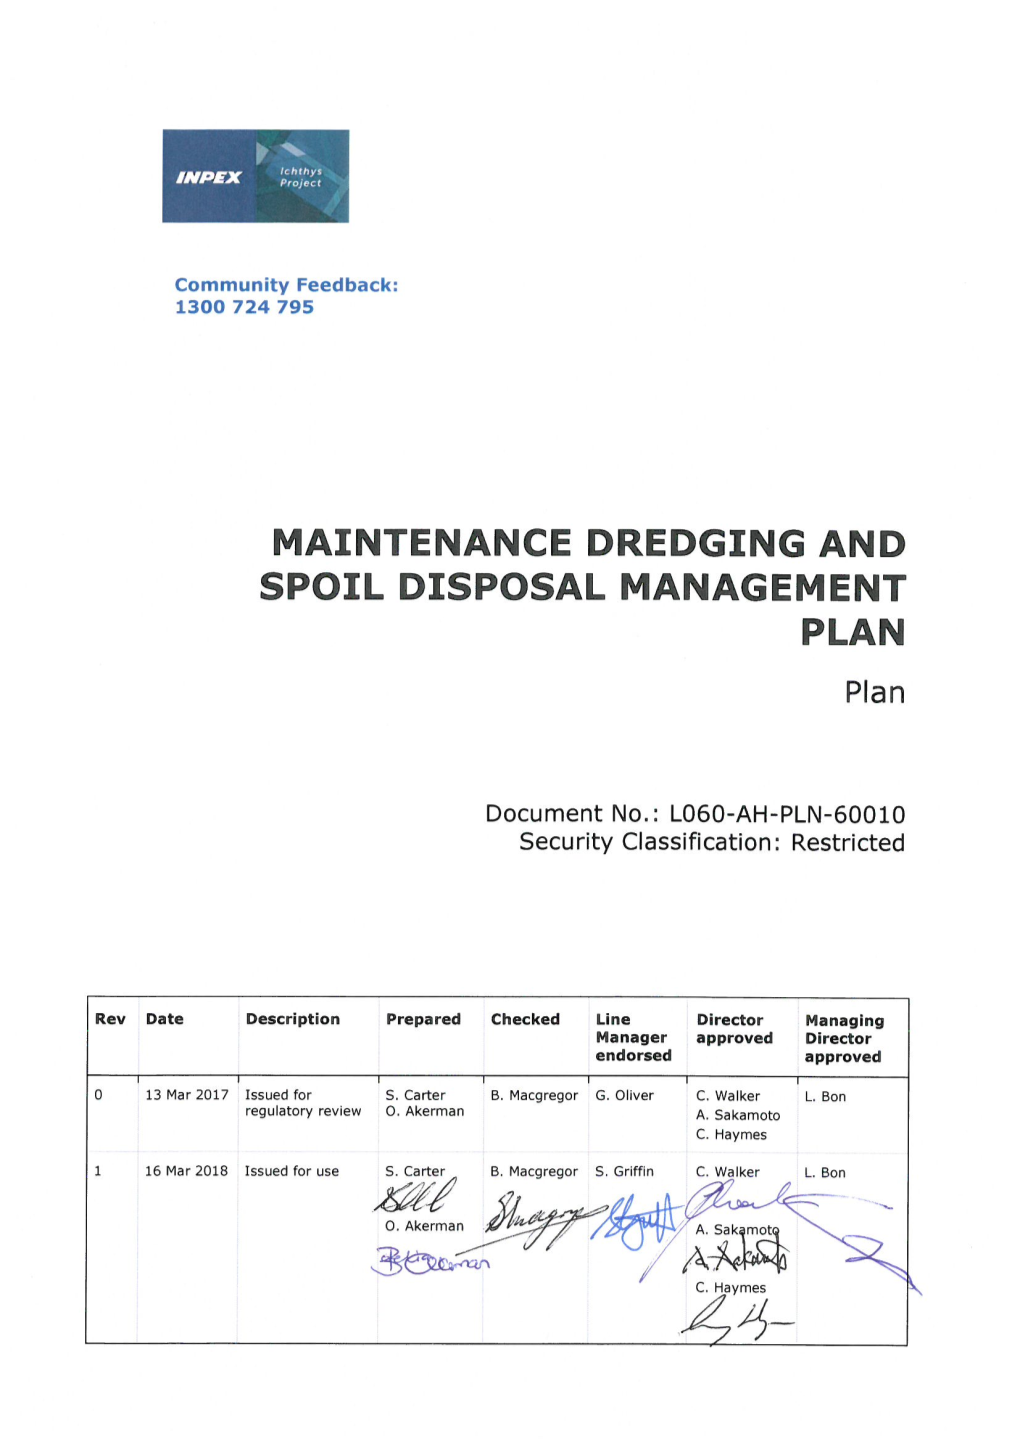 Maintenance Dredging and Spoil Disposal Management Plan